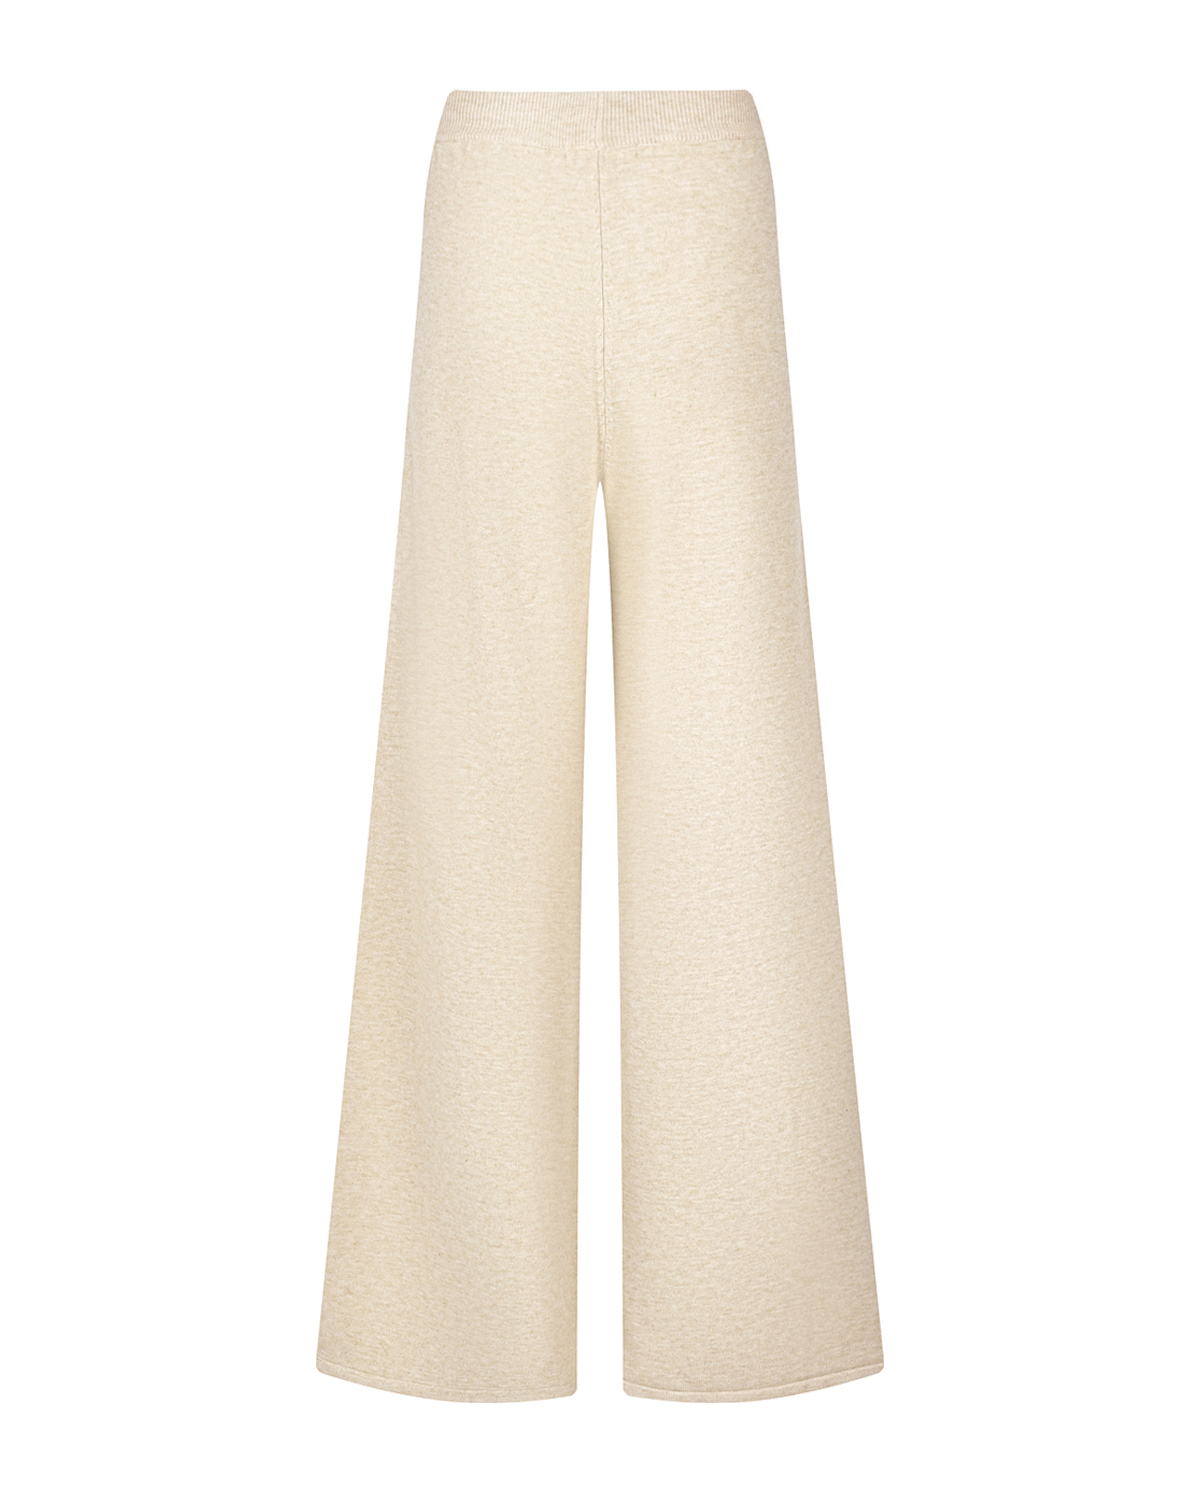 Бежевые брюки палаццо Hinnominate, размер 40, цвет бежевый - фото 4